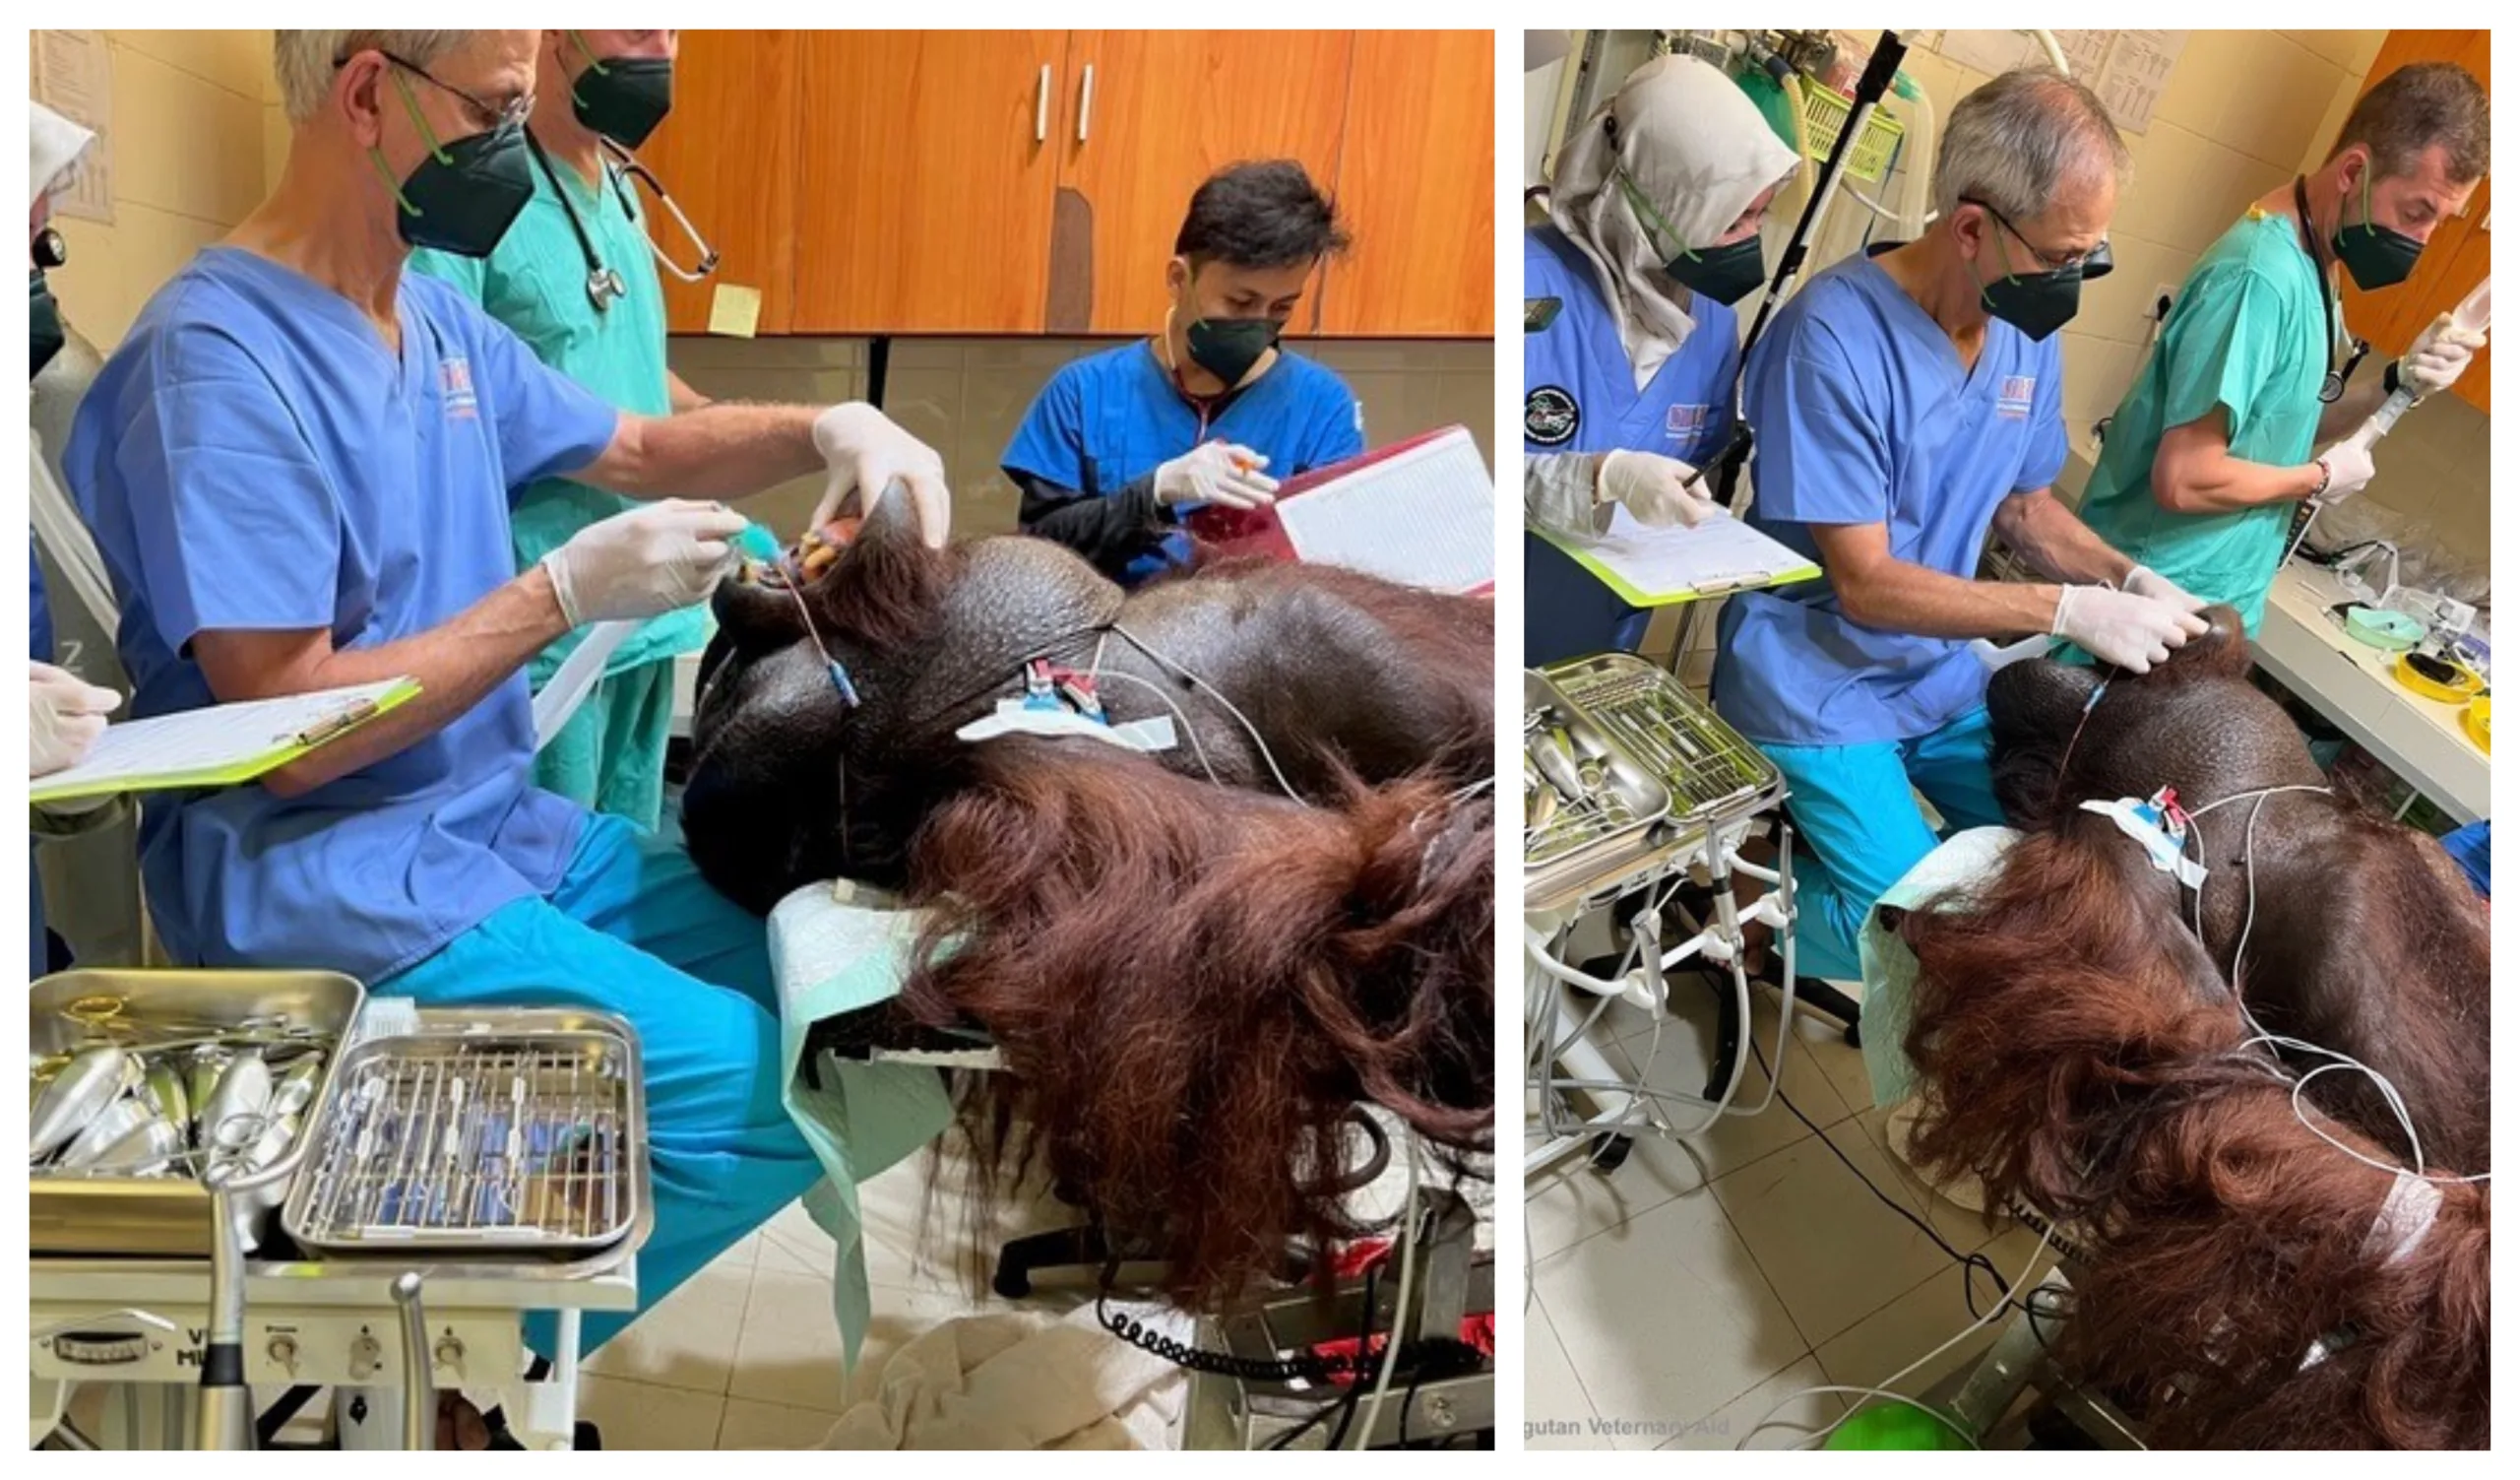 Cambridge vet uses dentistry skills at orangutan rescue and rehabilitation centre.